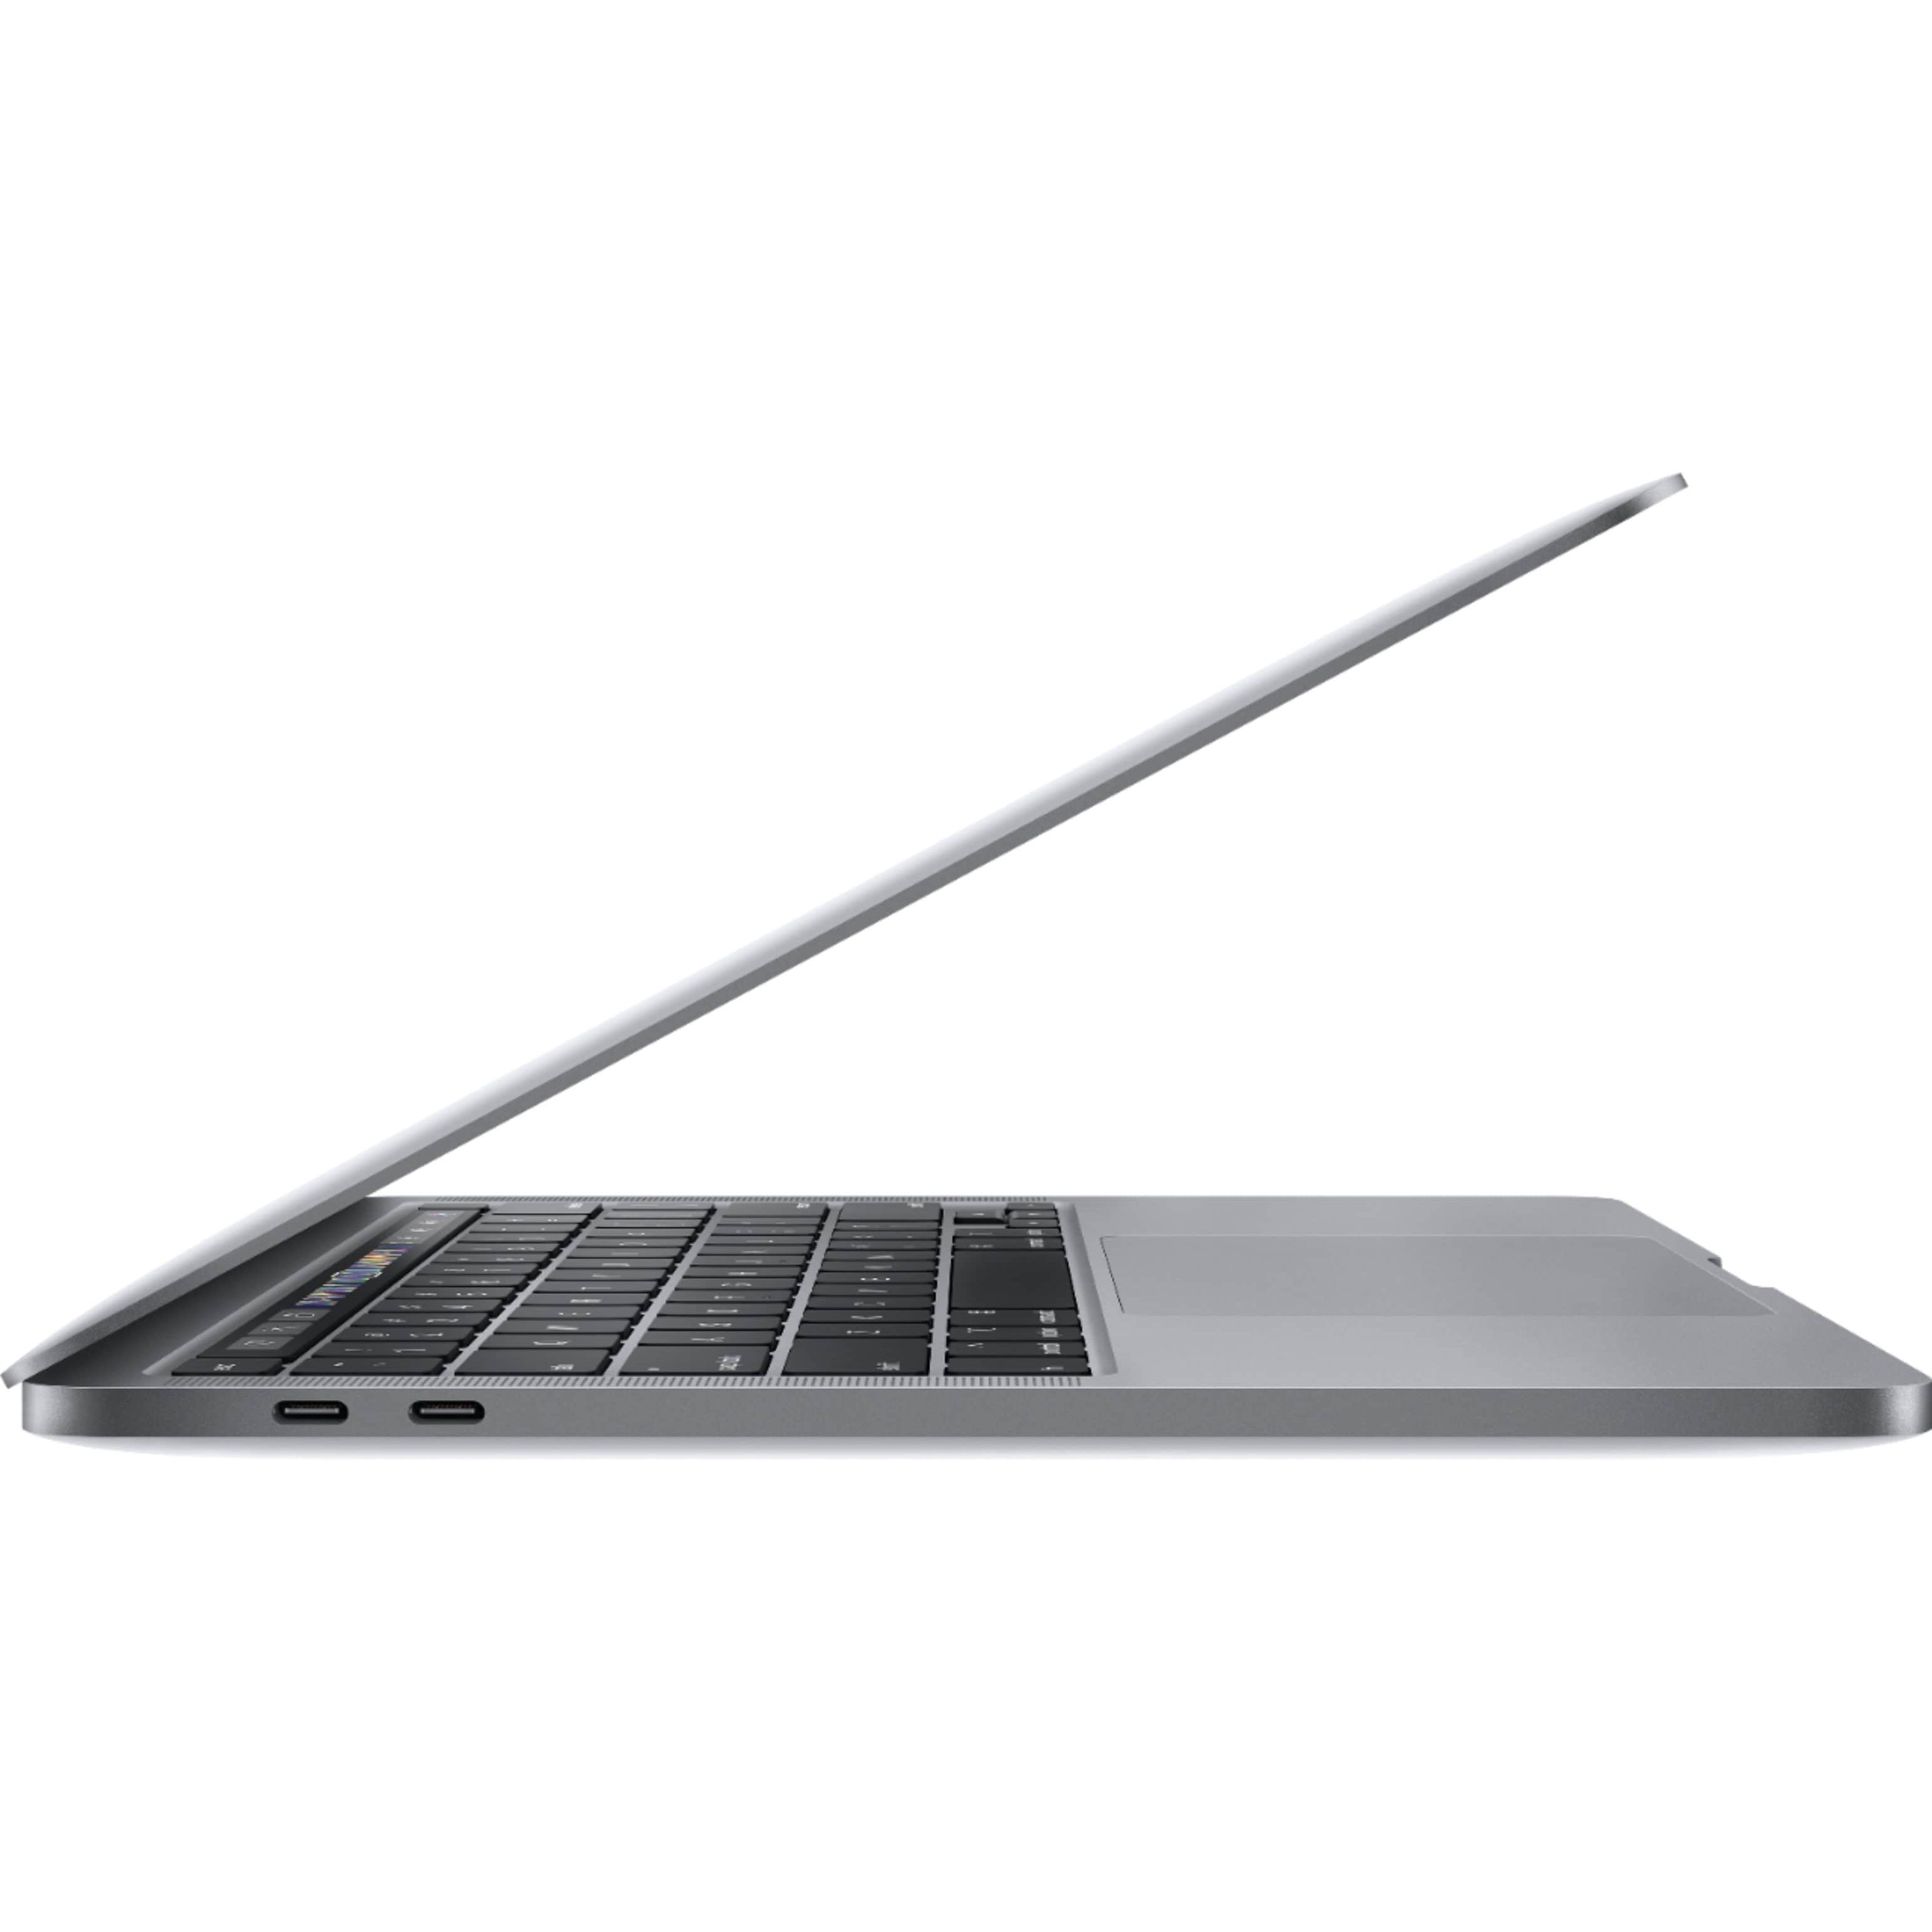 Apple MacBook Pro 13.3'' MXK32LL/A (2020) Laptop, Intel Core i5, 8GB RAM, 256GB, Space Grey - Refurbished Excellent